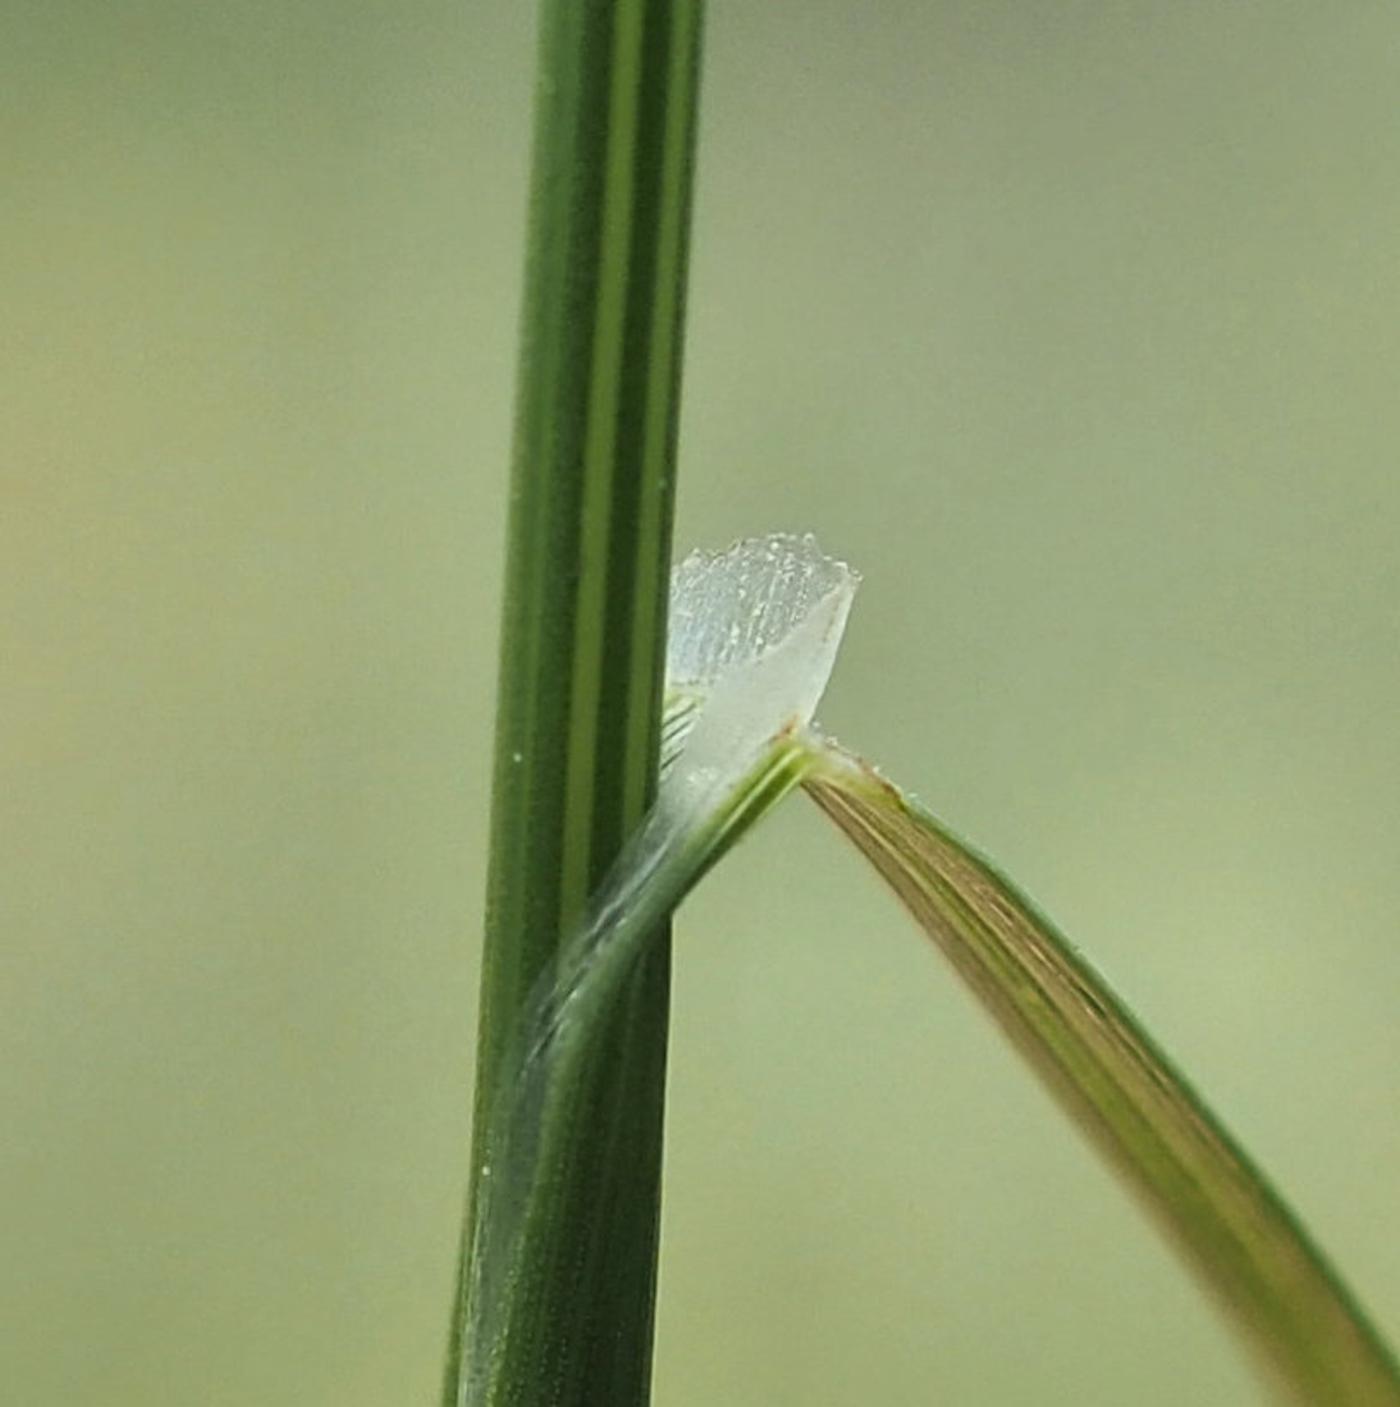 Hair-grass, Crested leaf